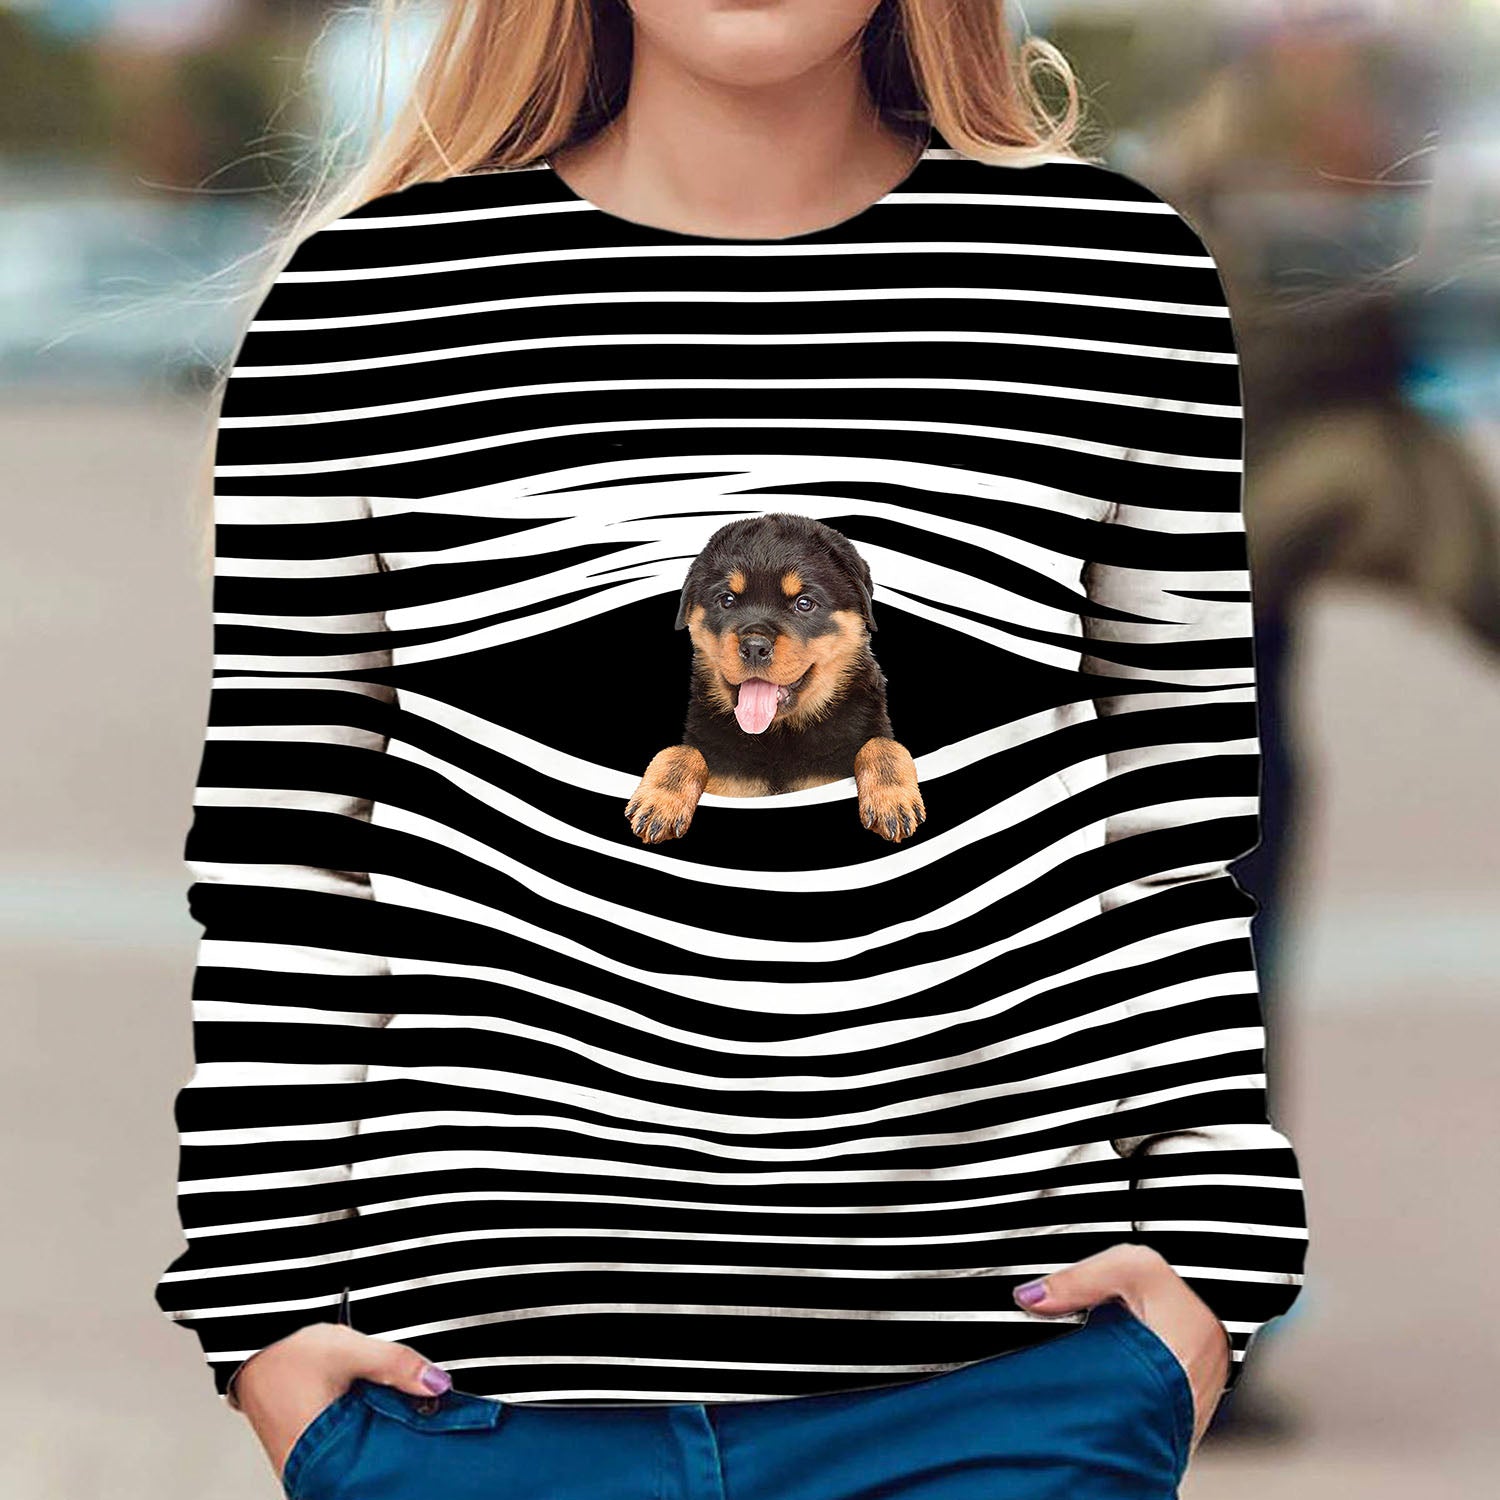 Rottweiler - Stripe - Premium Sweater